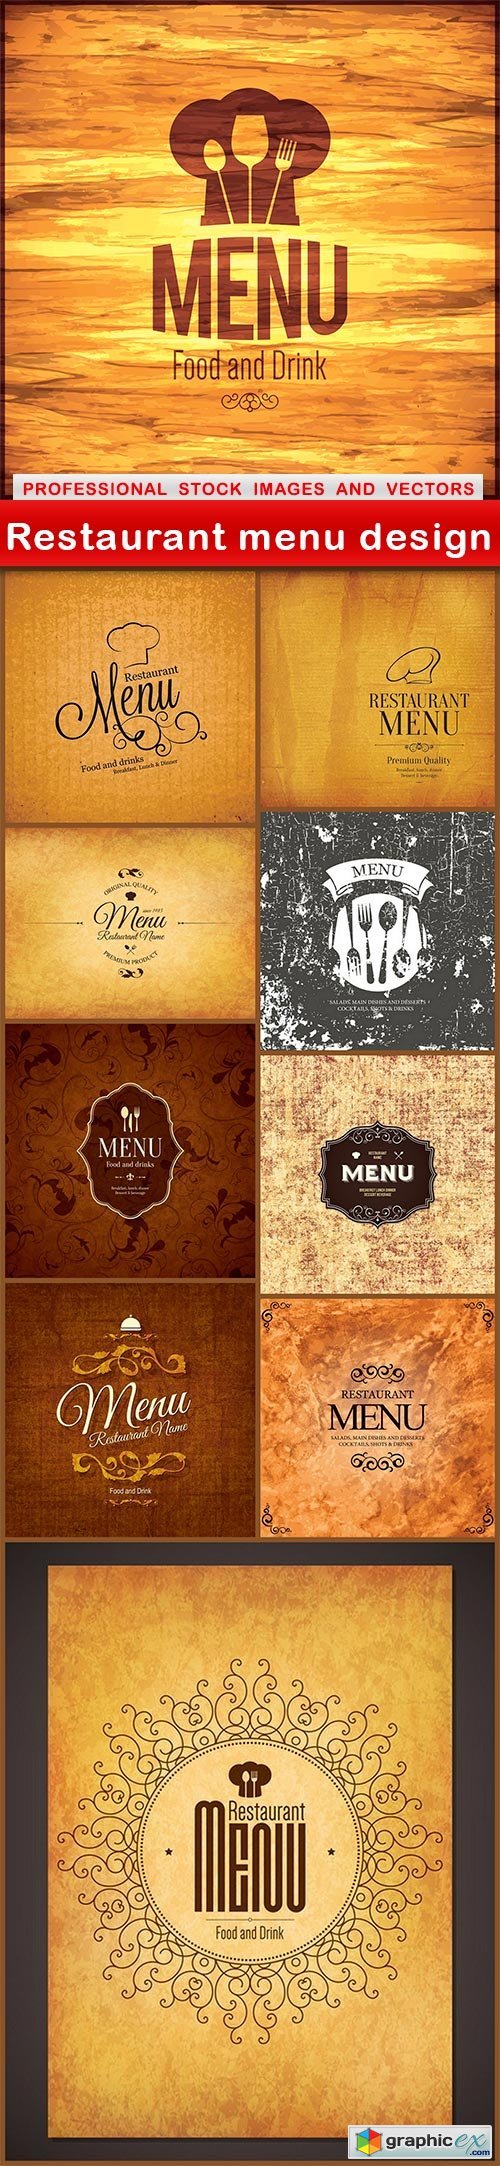 Restaurant menu design - 10 EPS